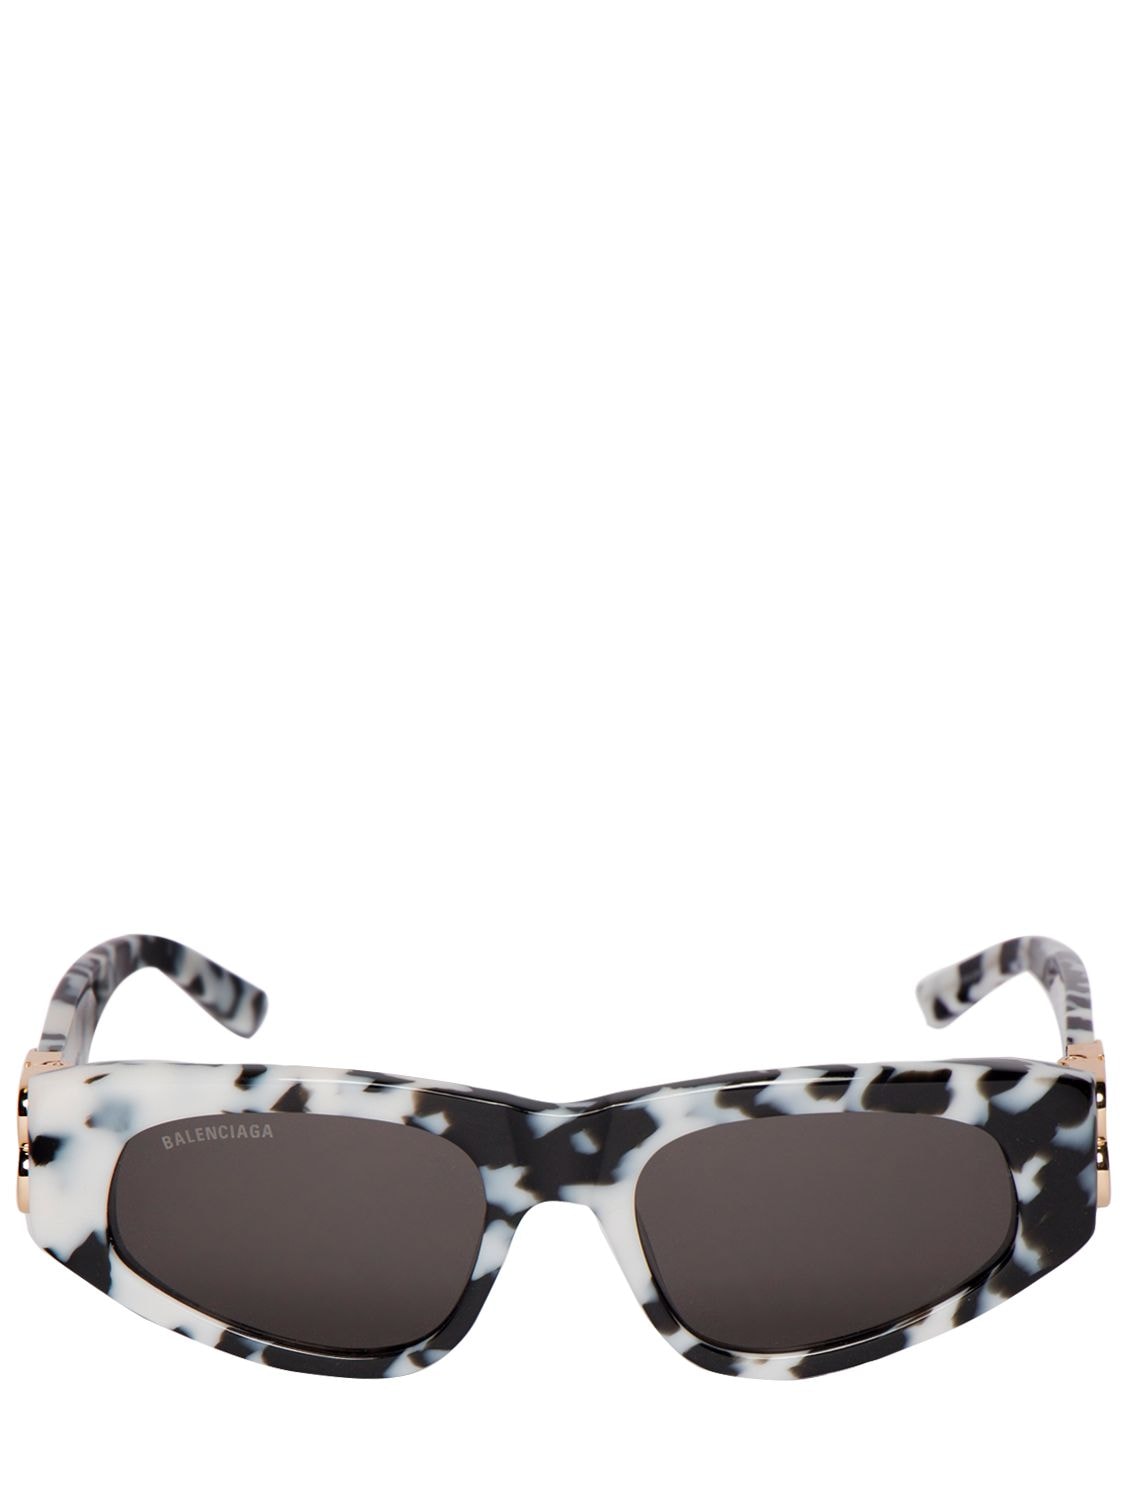 Image of 0095s Dynasty Cat-eye Acetate Sunglasses